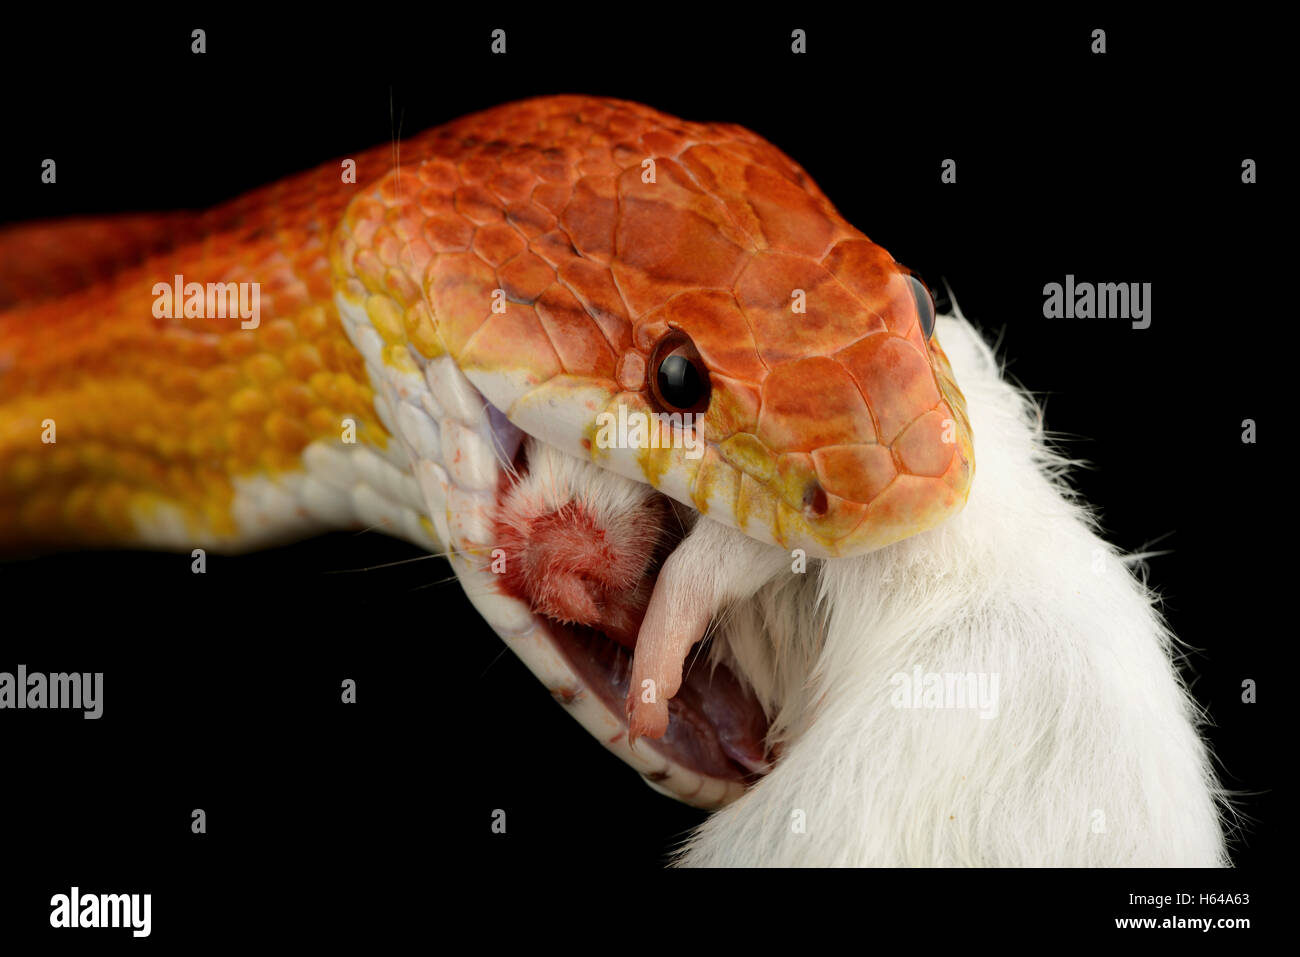 Corn snake, Pantherophis guttatus, eating mouse Stock Photo